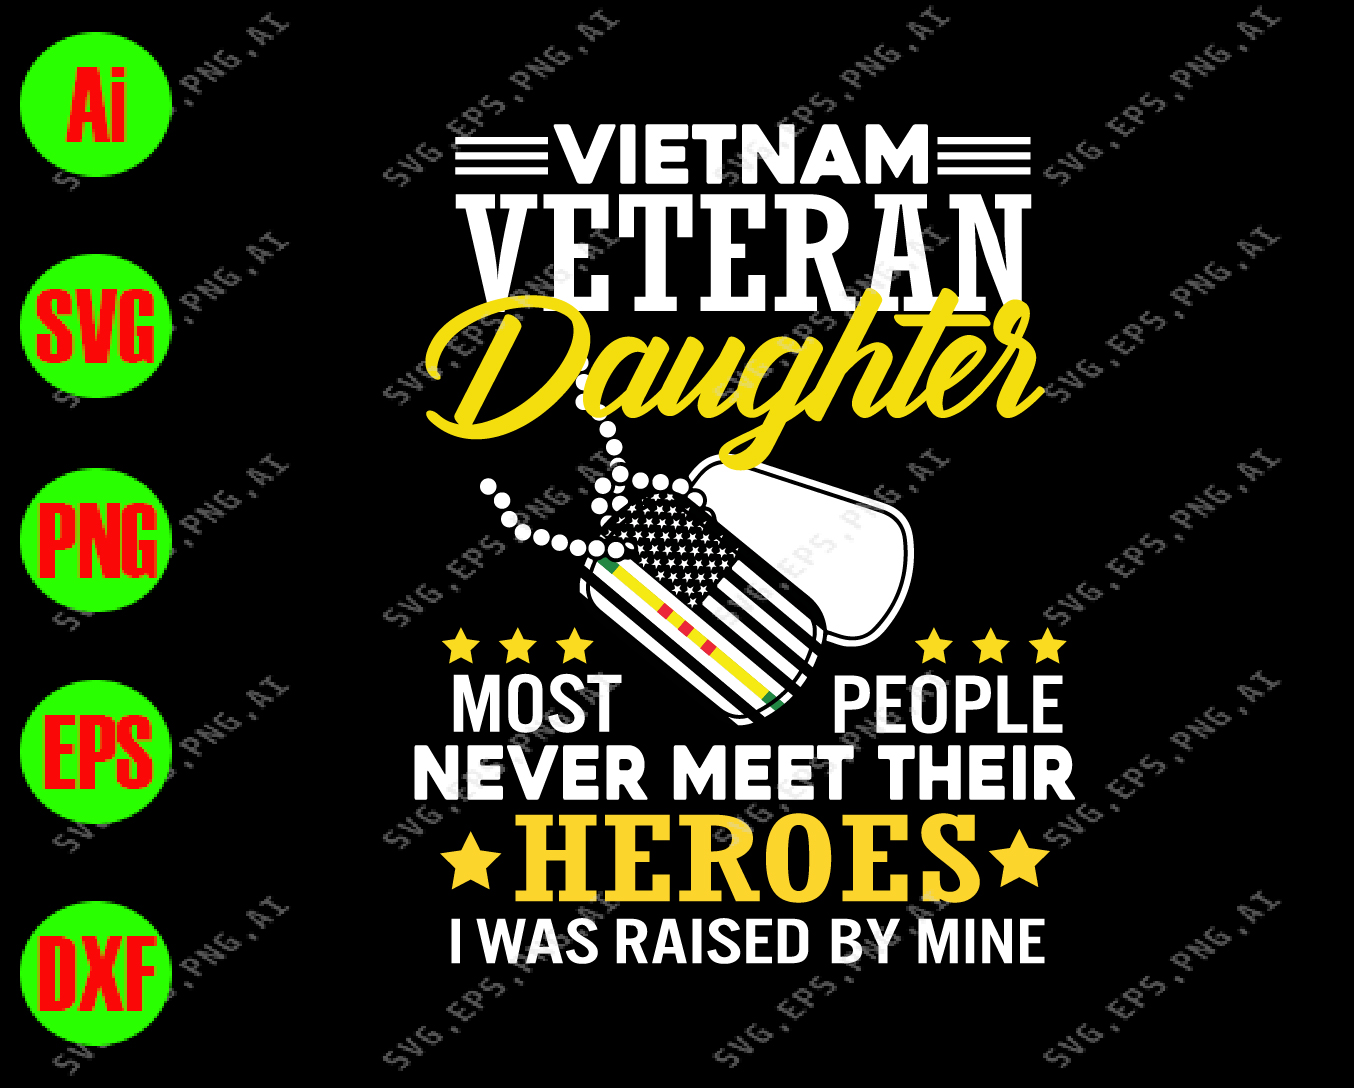 Download Vietnam Veteran Daughter Most People Never Meet Their Heroes I Was Raised By Mine Svg Dxf Eps Png Digital Download Designbtf Com